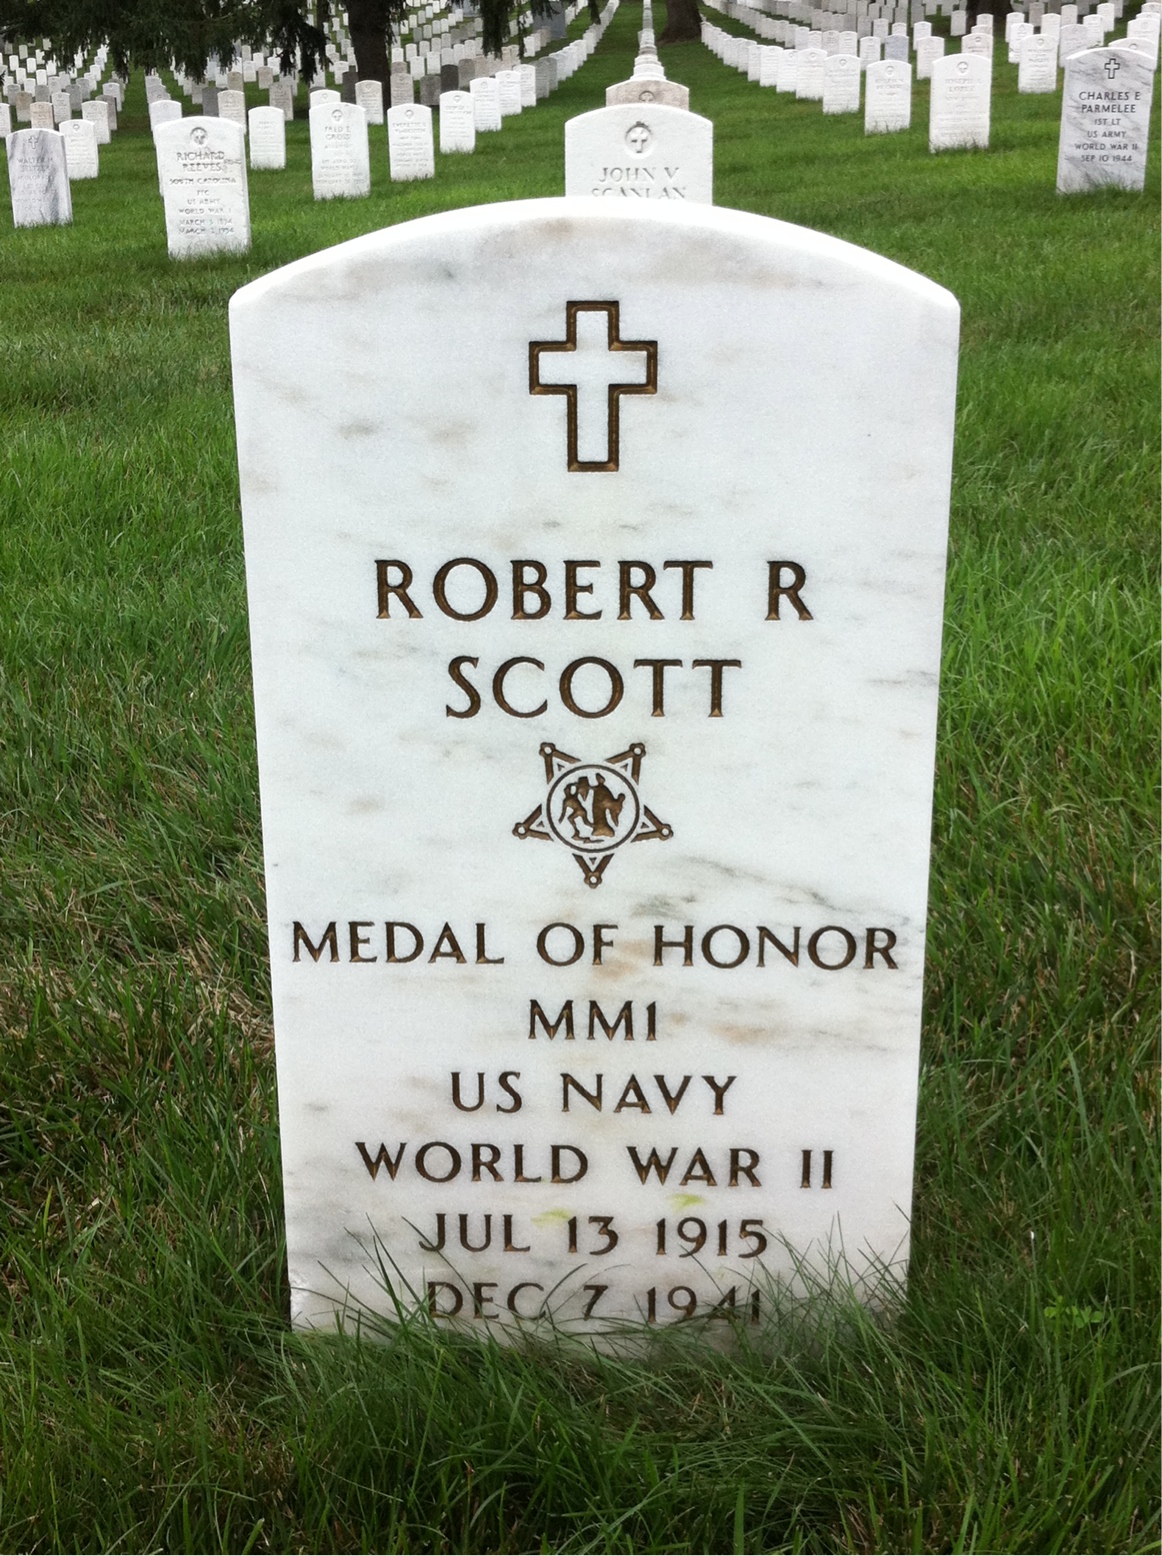 Headstone of Medal of Honor recipient Robert R. Scott